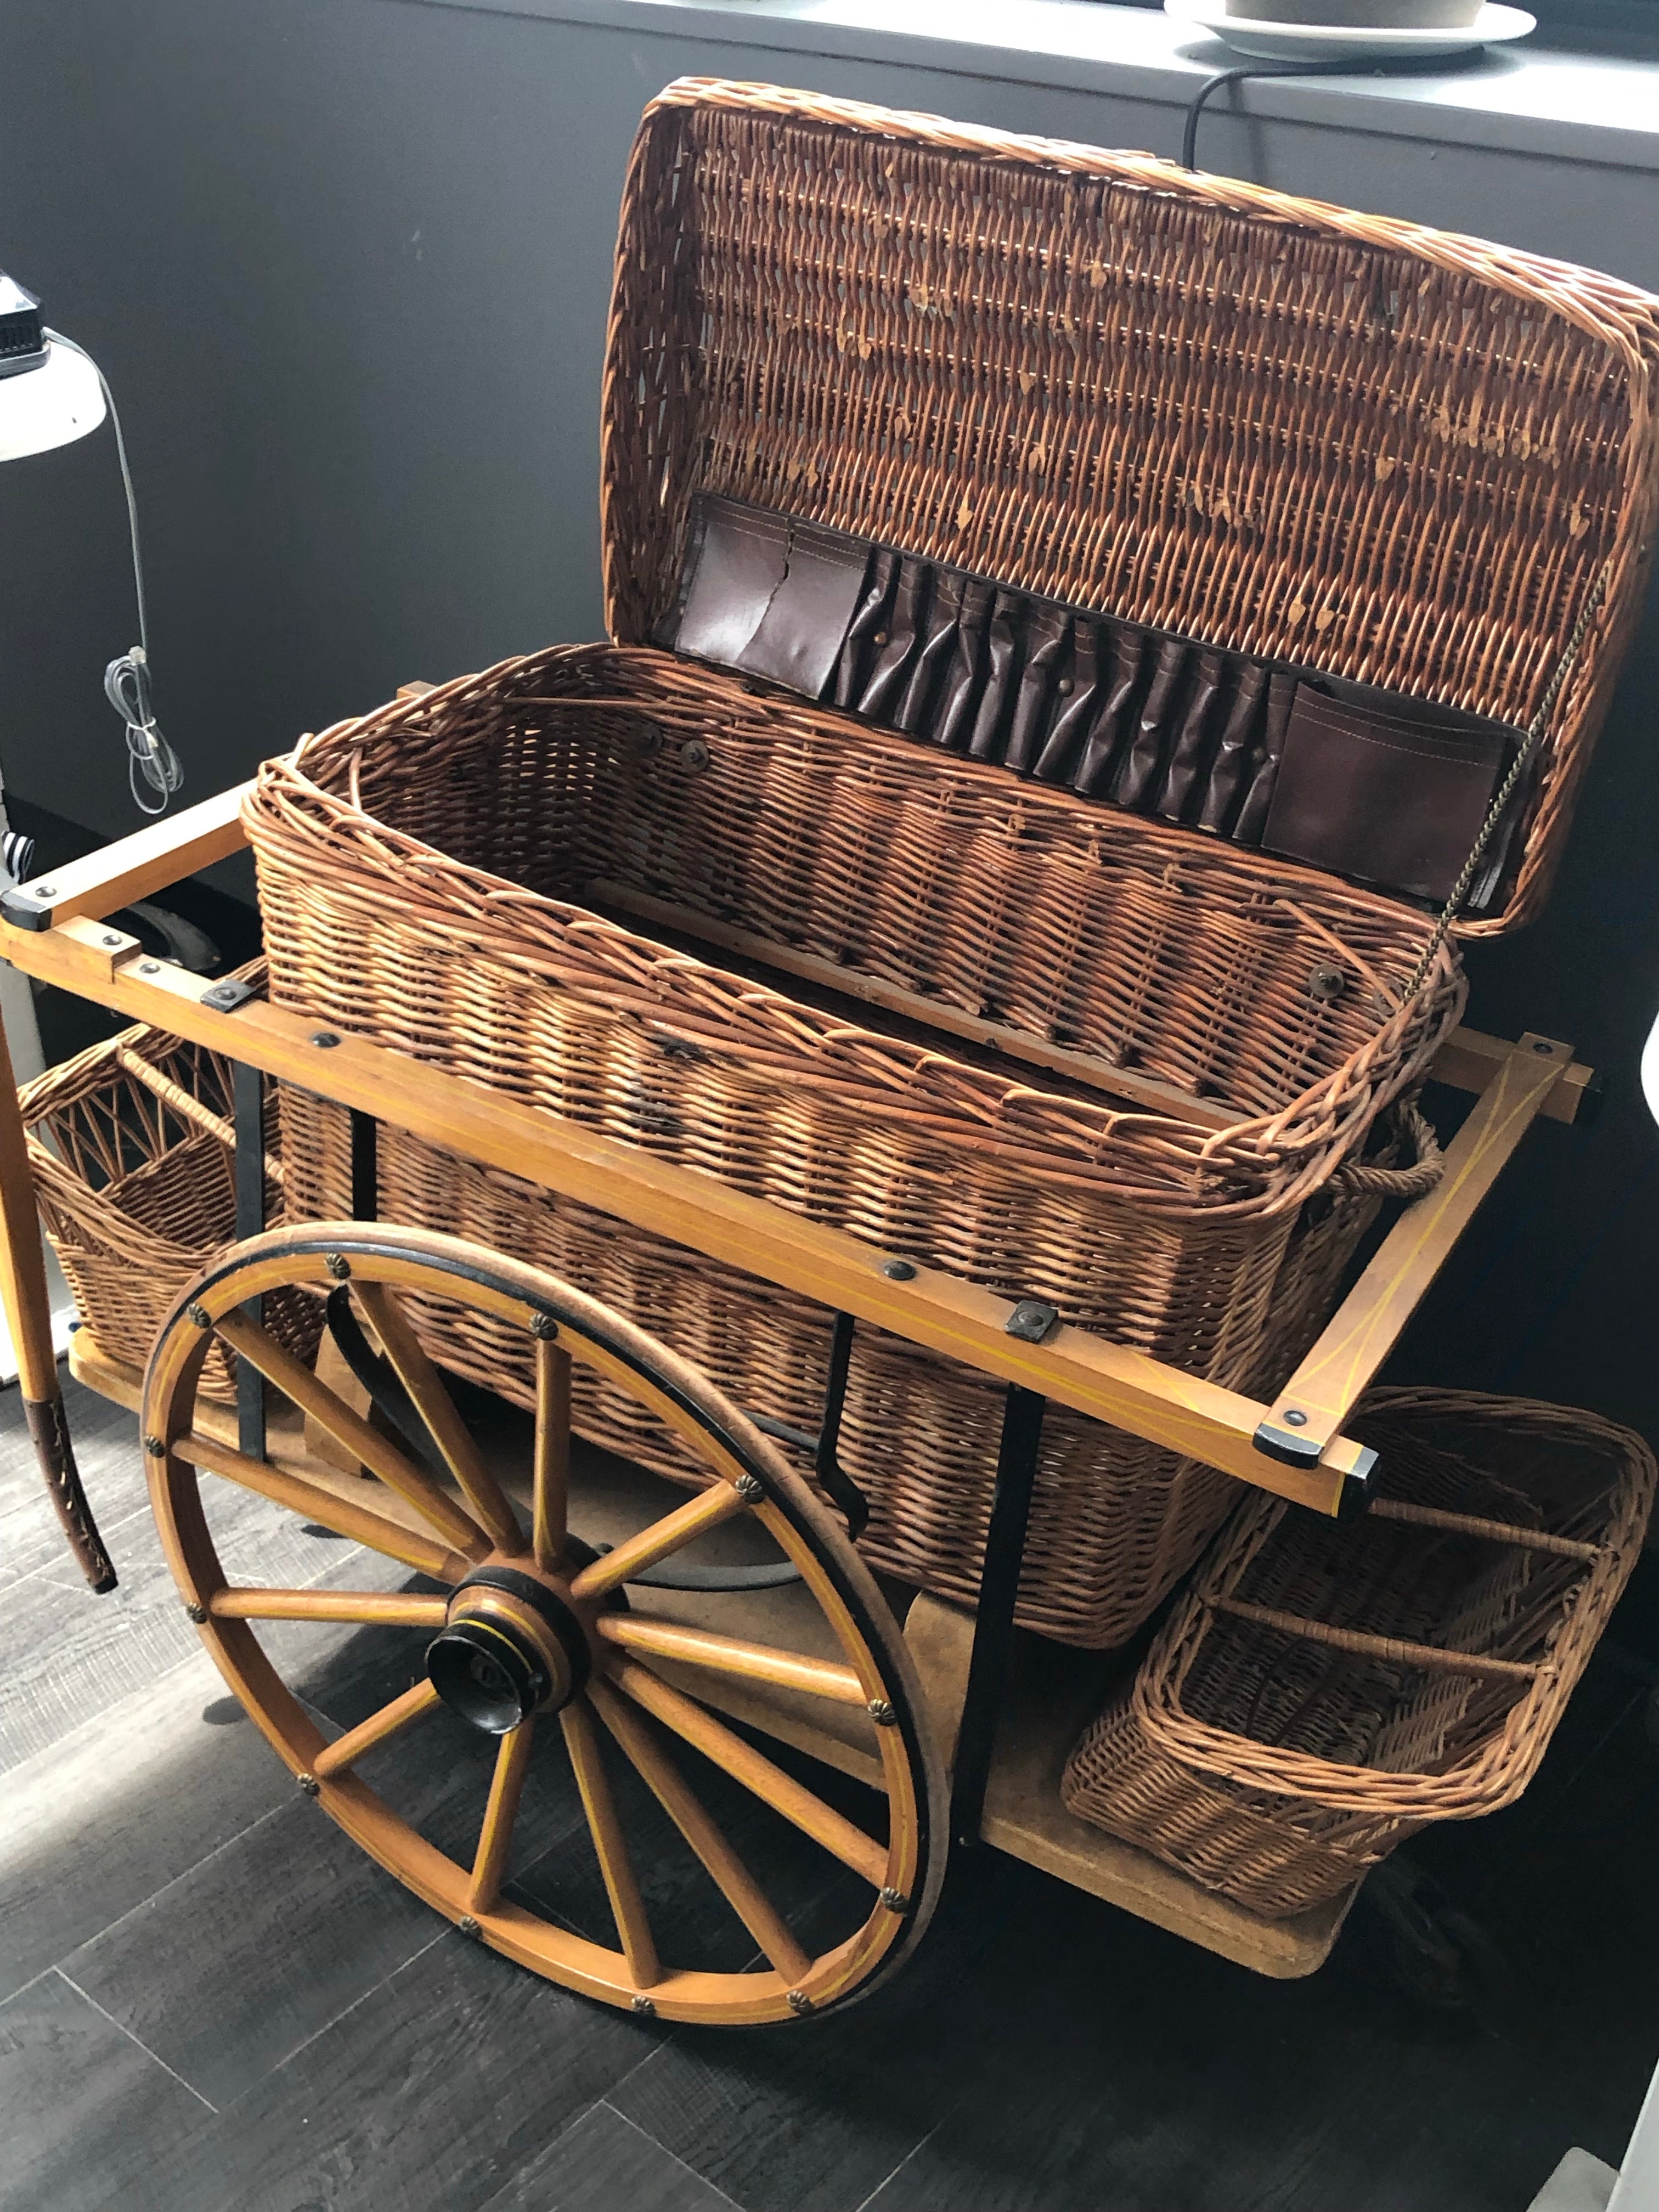 Vintage picnic cart